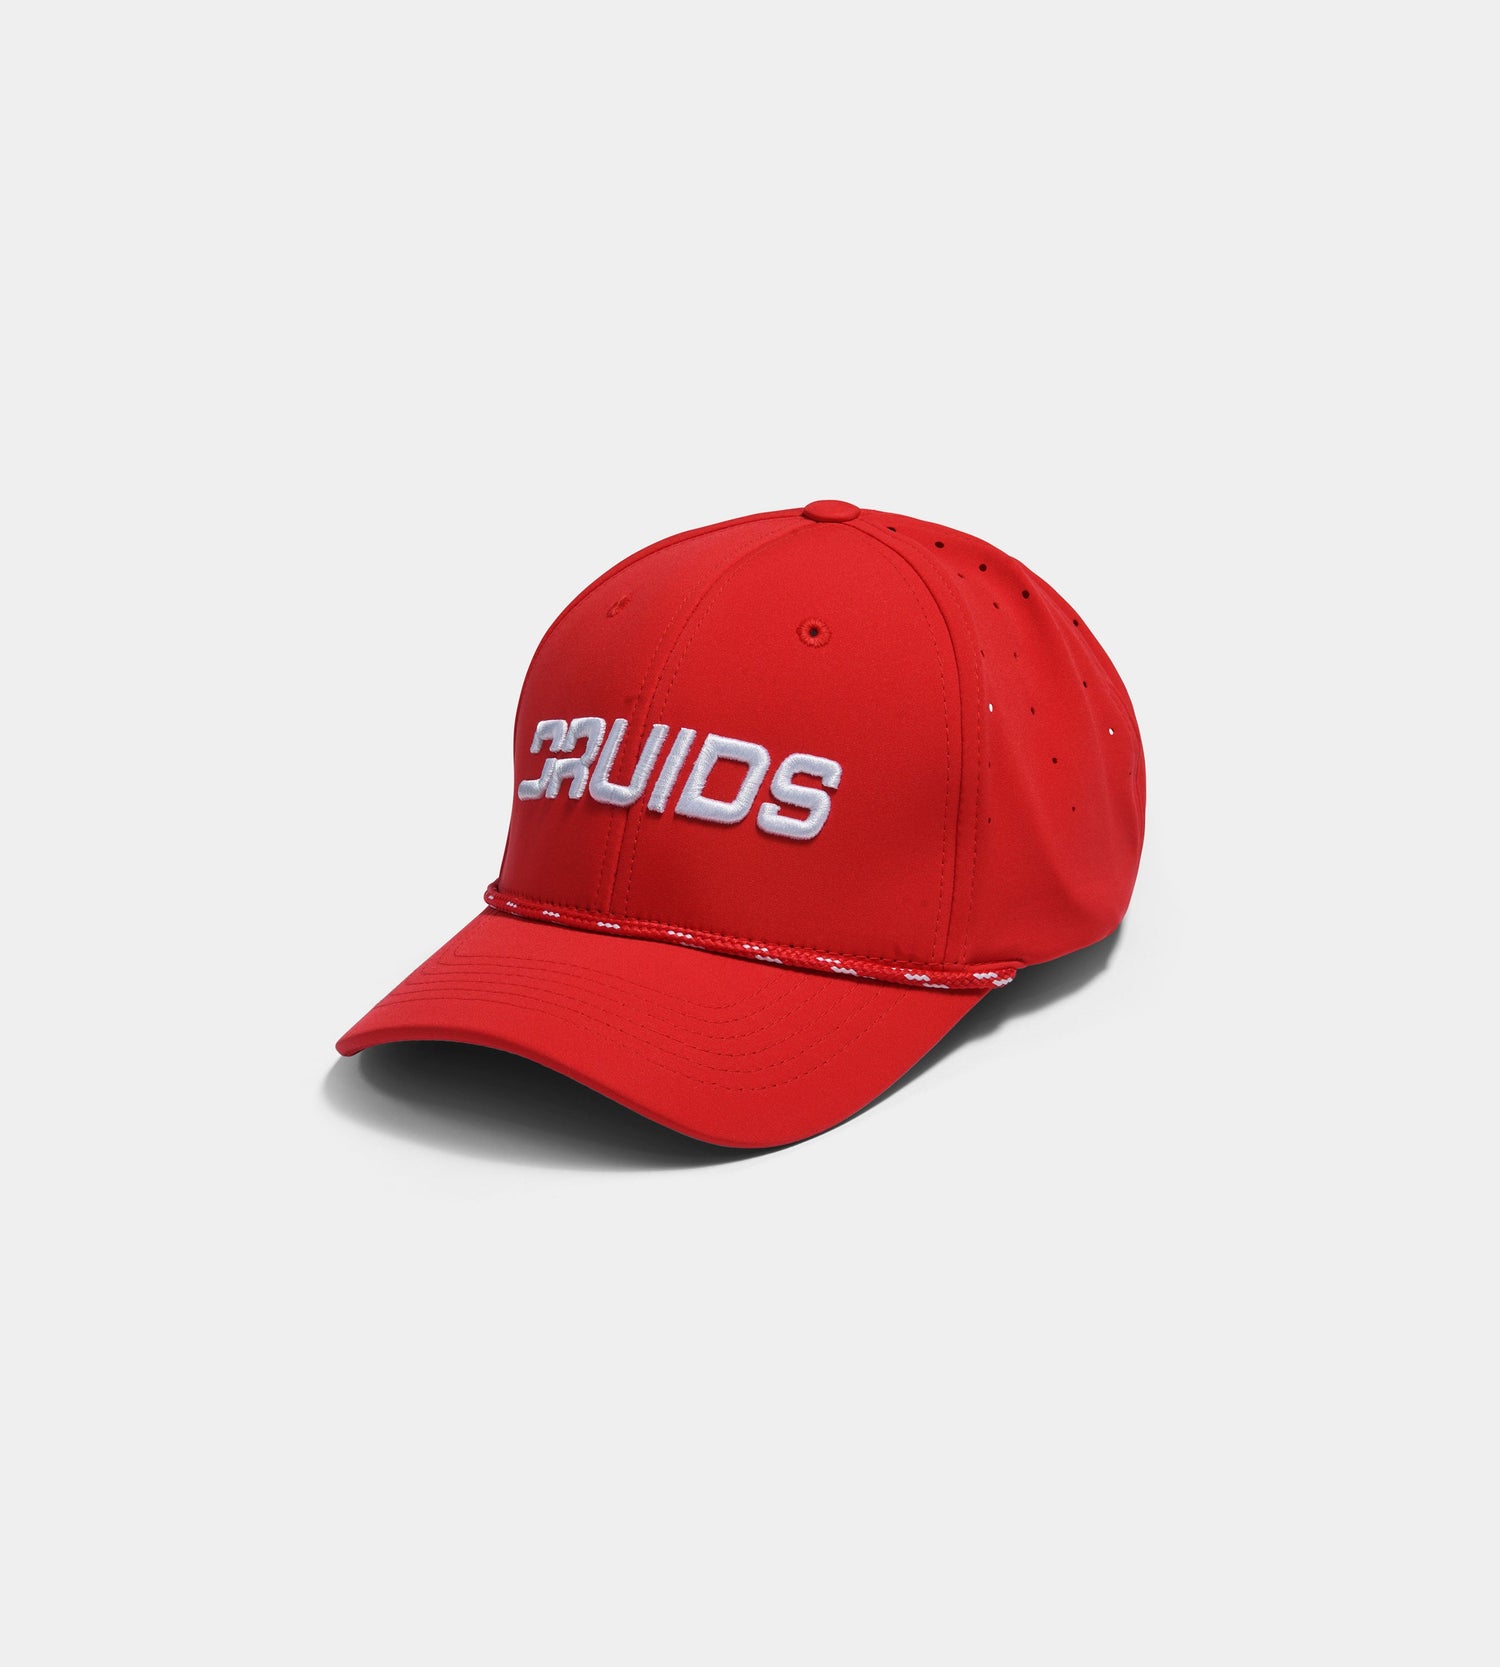 KIDS DRUIDS ROPE CAP - RED